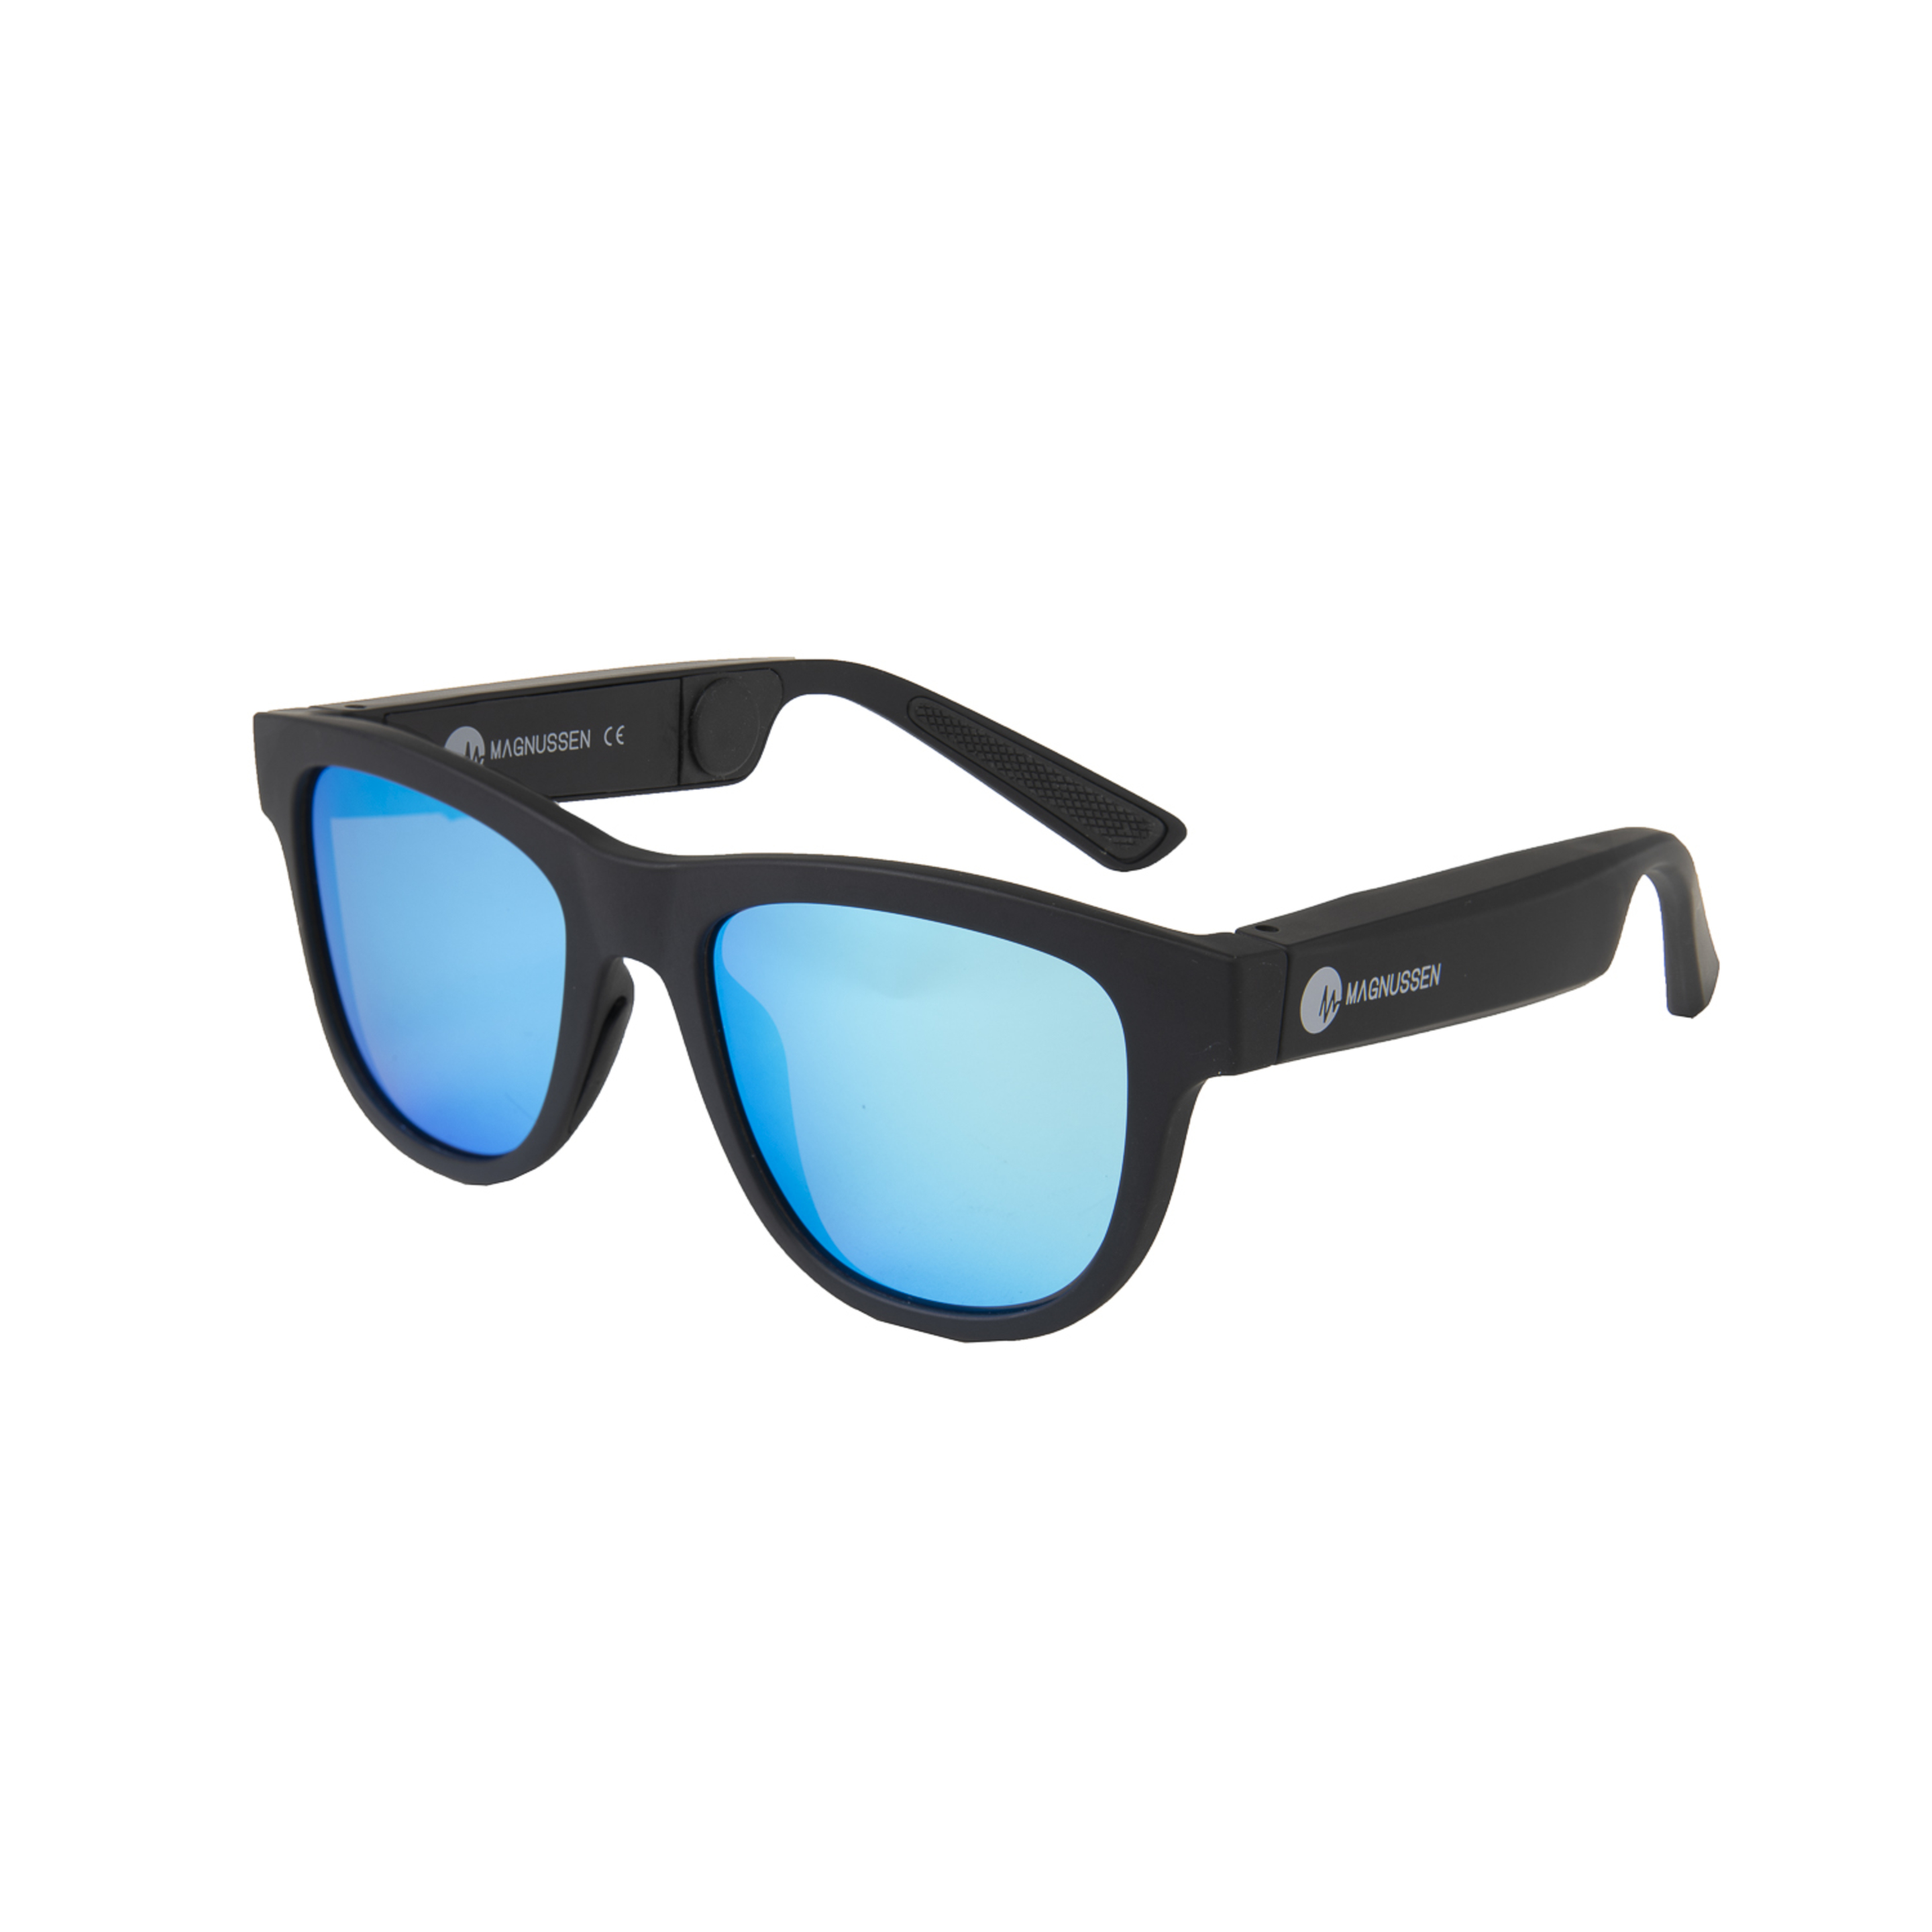 Gafas De Sol Magnussen G1 Bluetooth - negro-azul - 